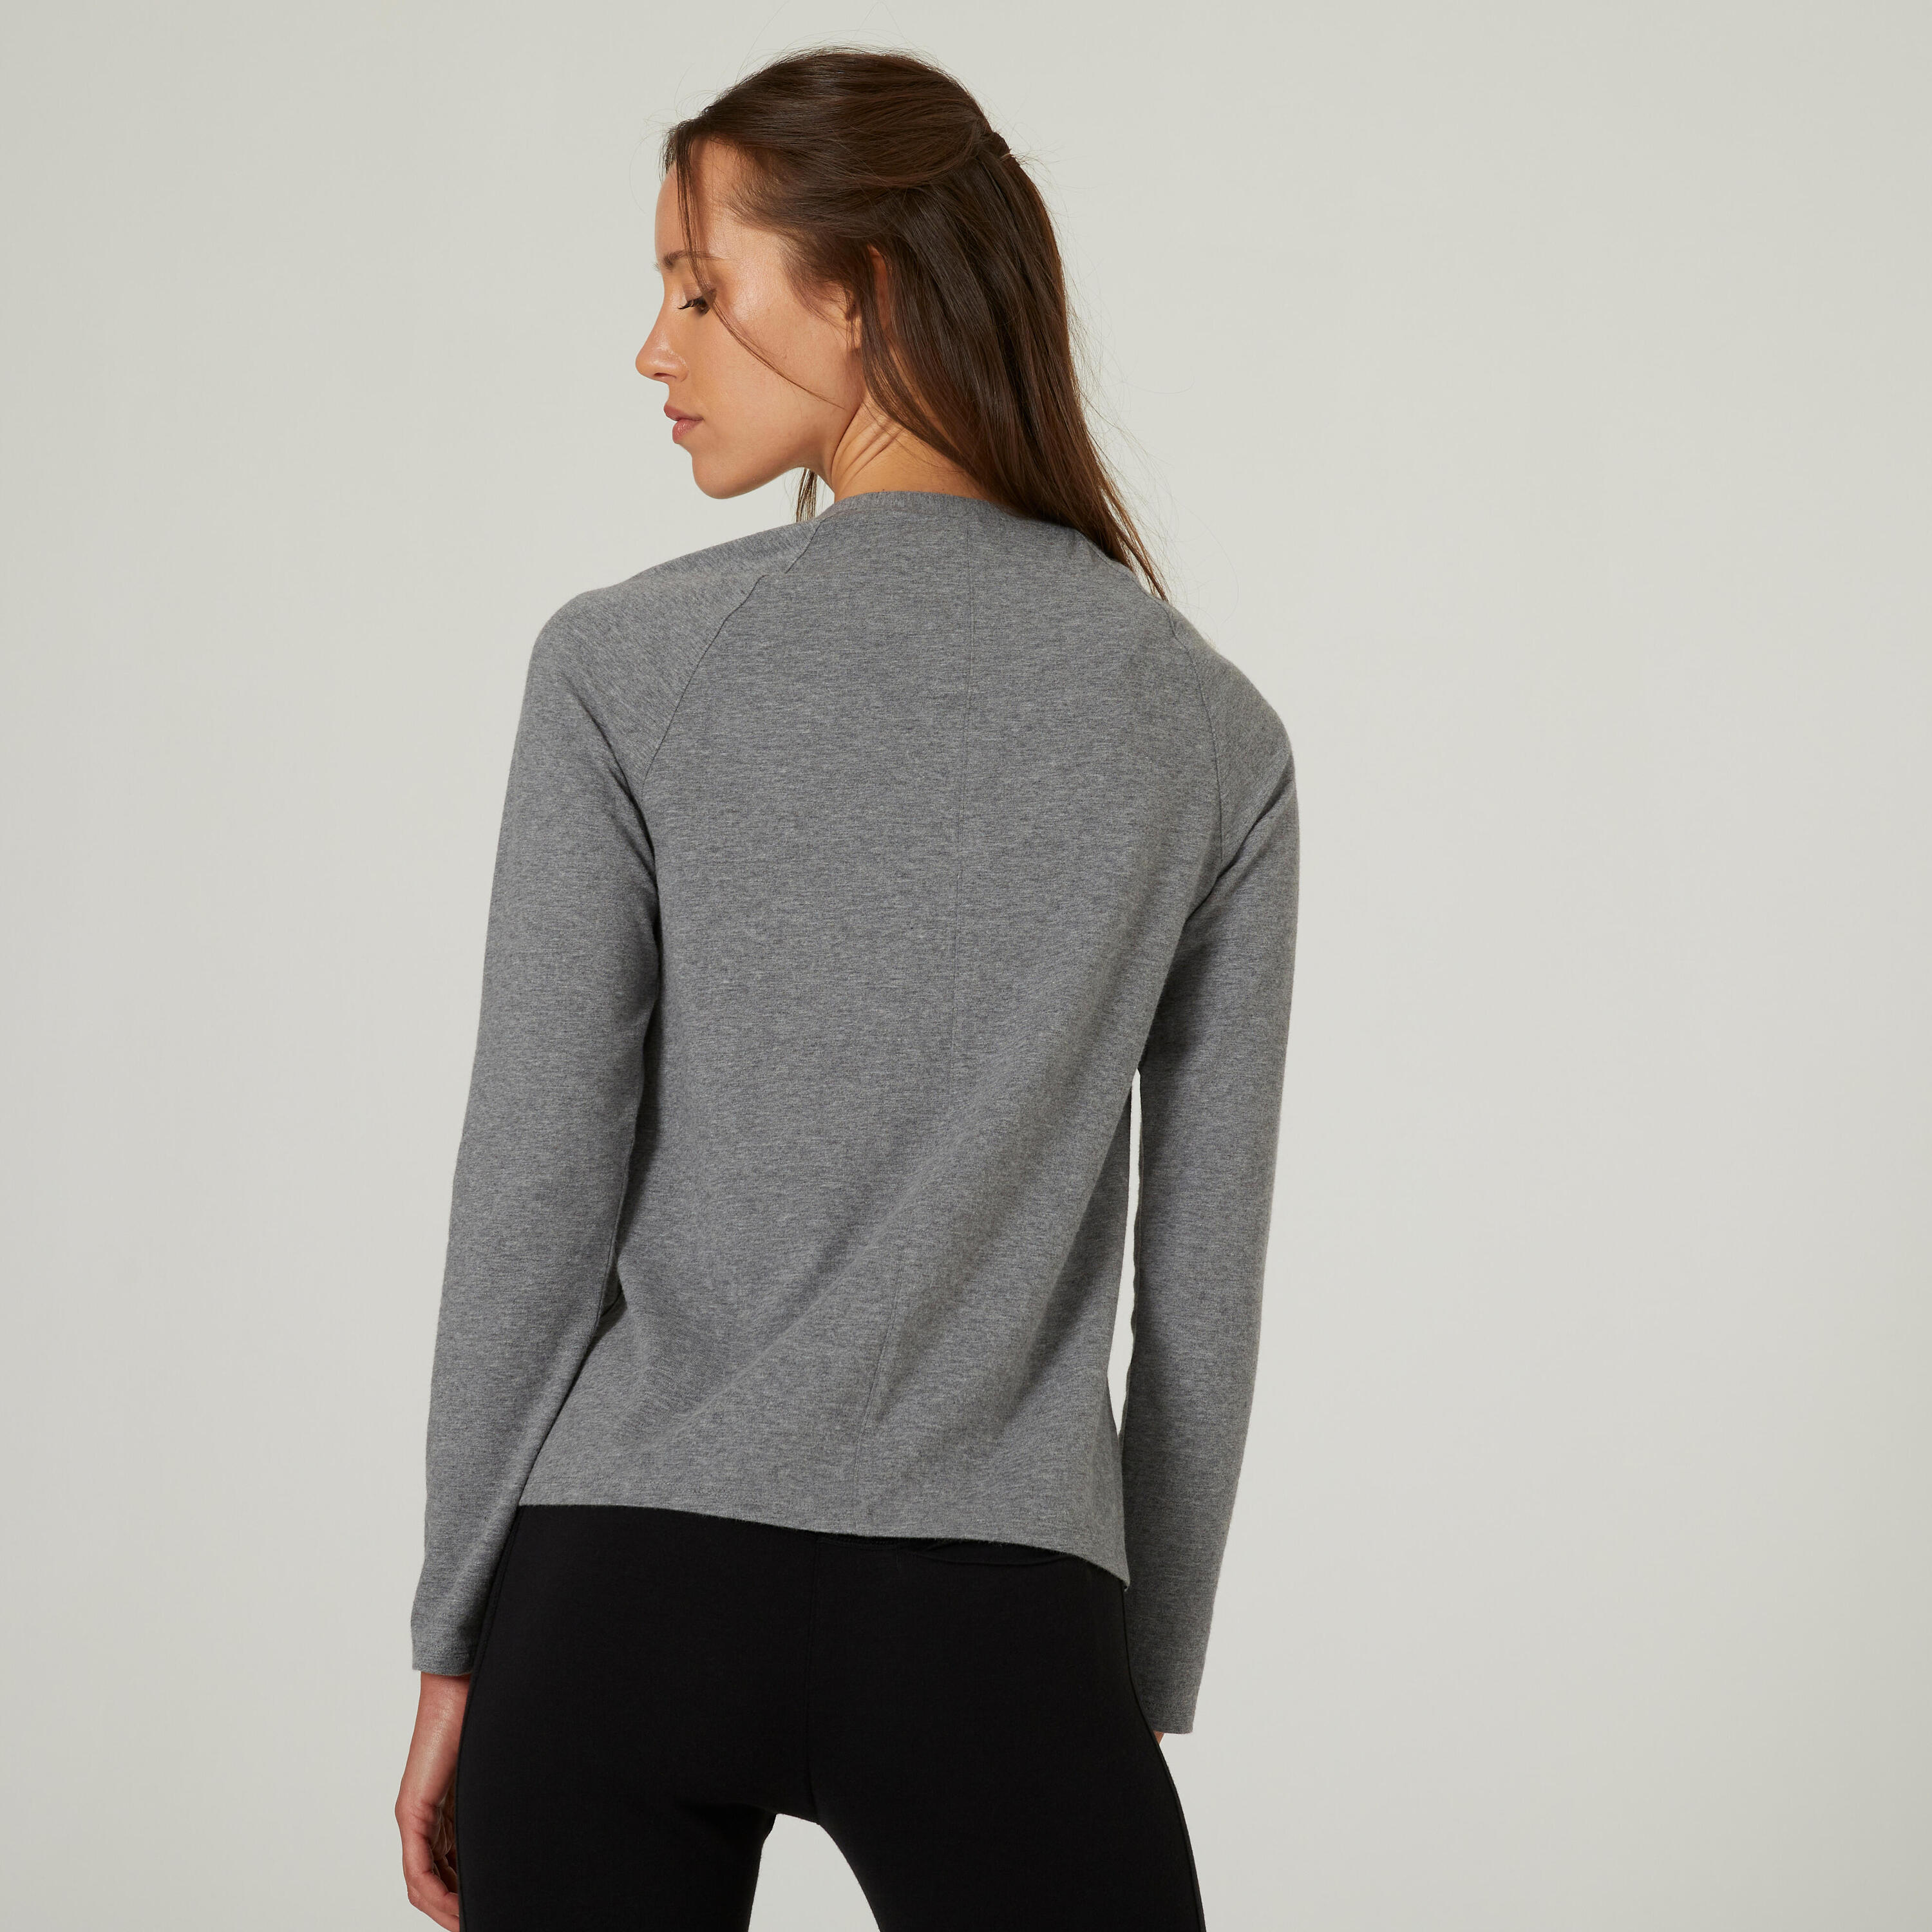 Women's Long-Sleeved Fitness T-Shirt 500 - Grey 2/6